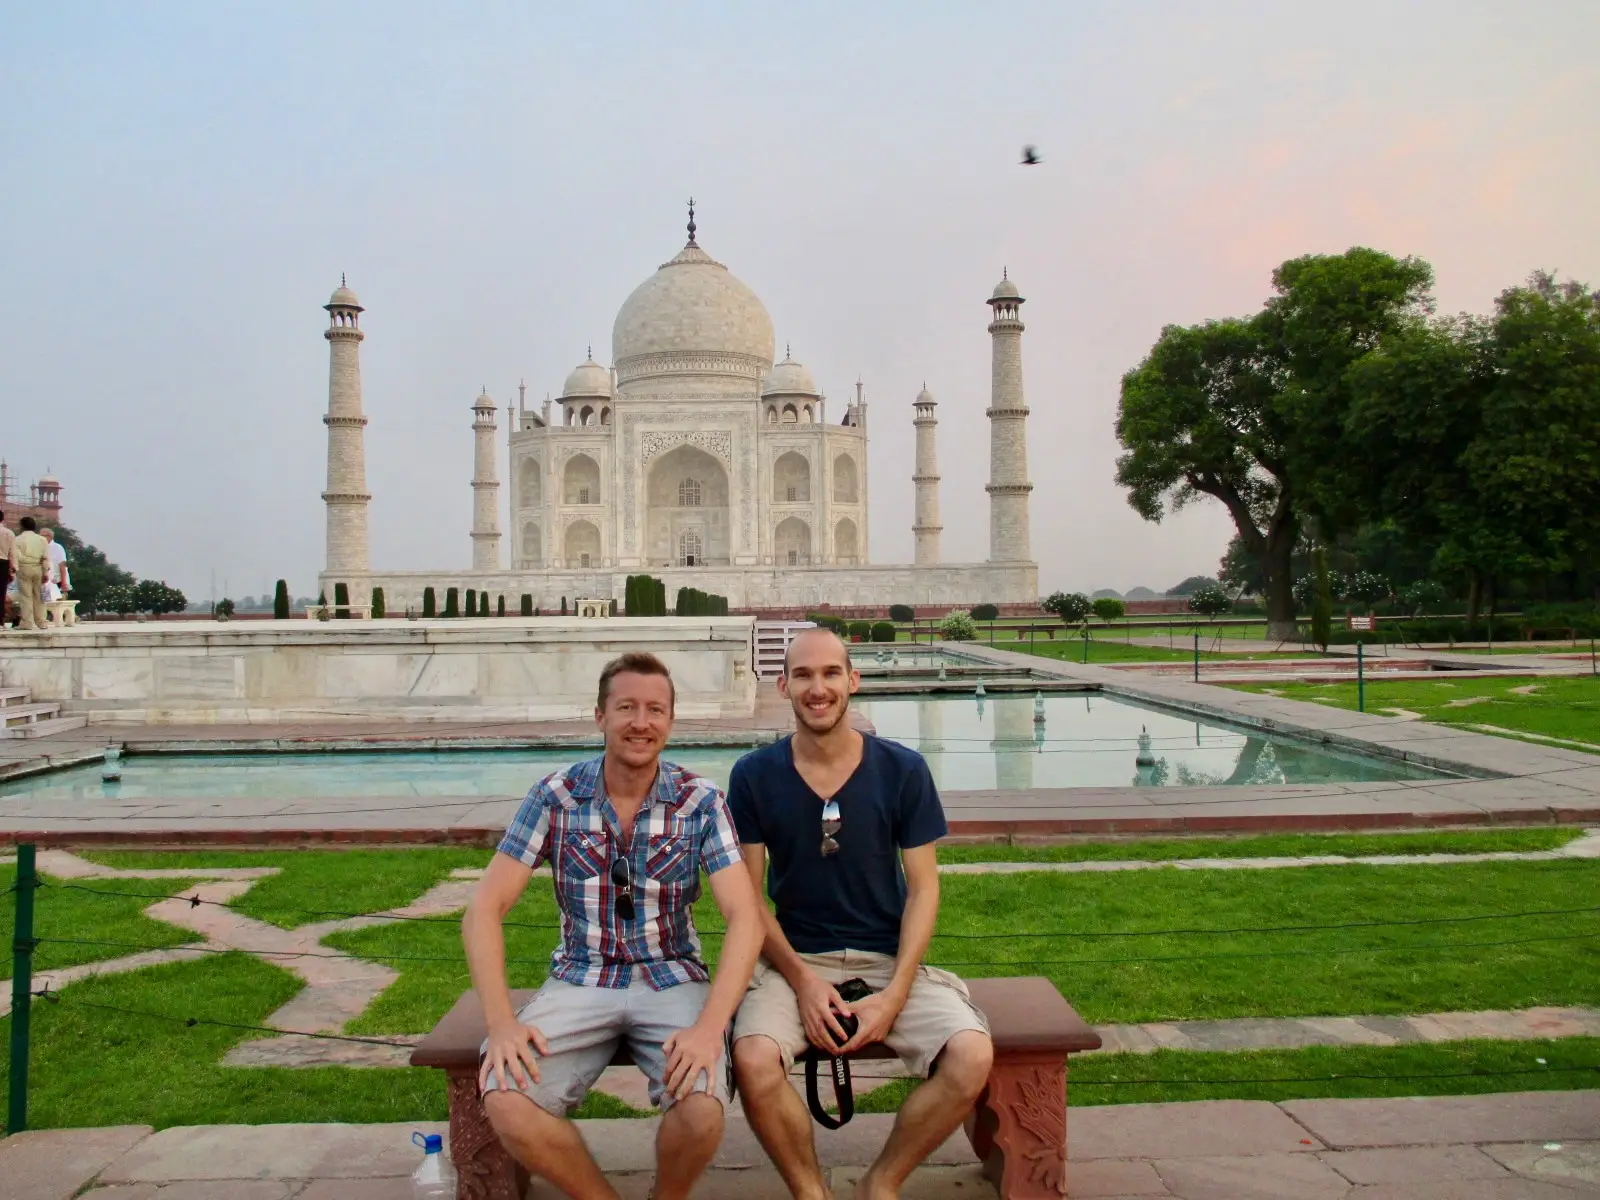 Mat and Stoewie at the Taj Mahal, India